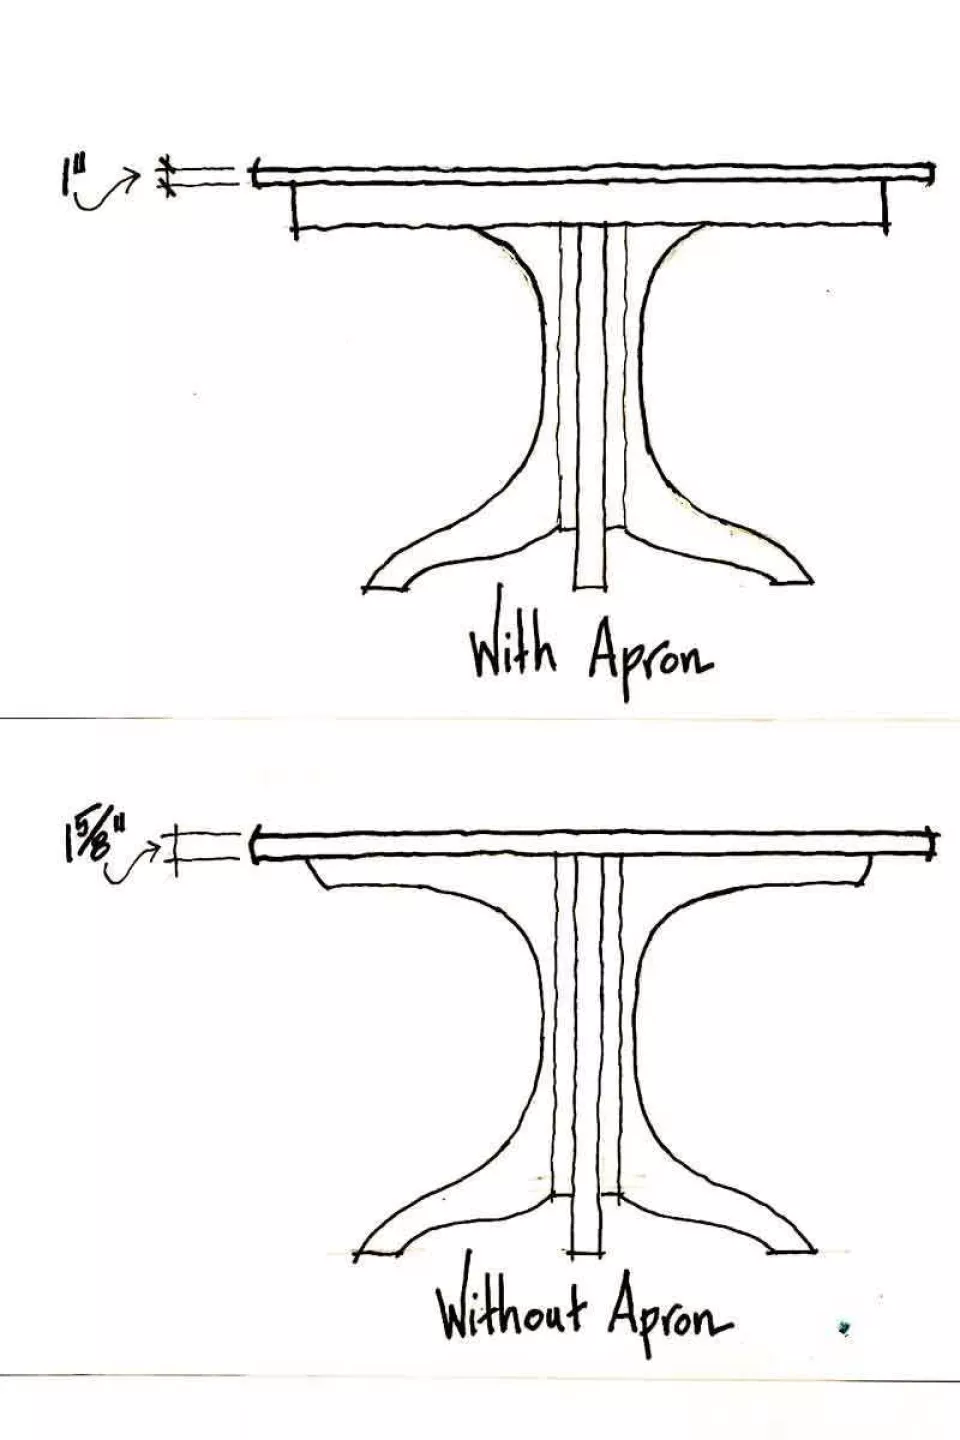 Johnson pedestal table dimension drawings